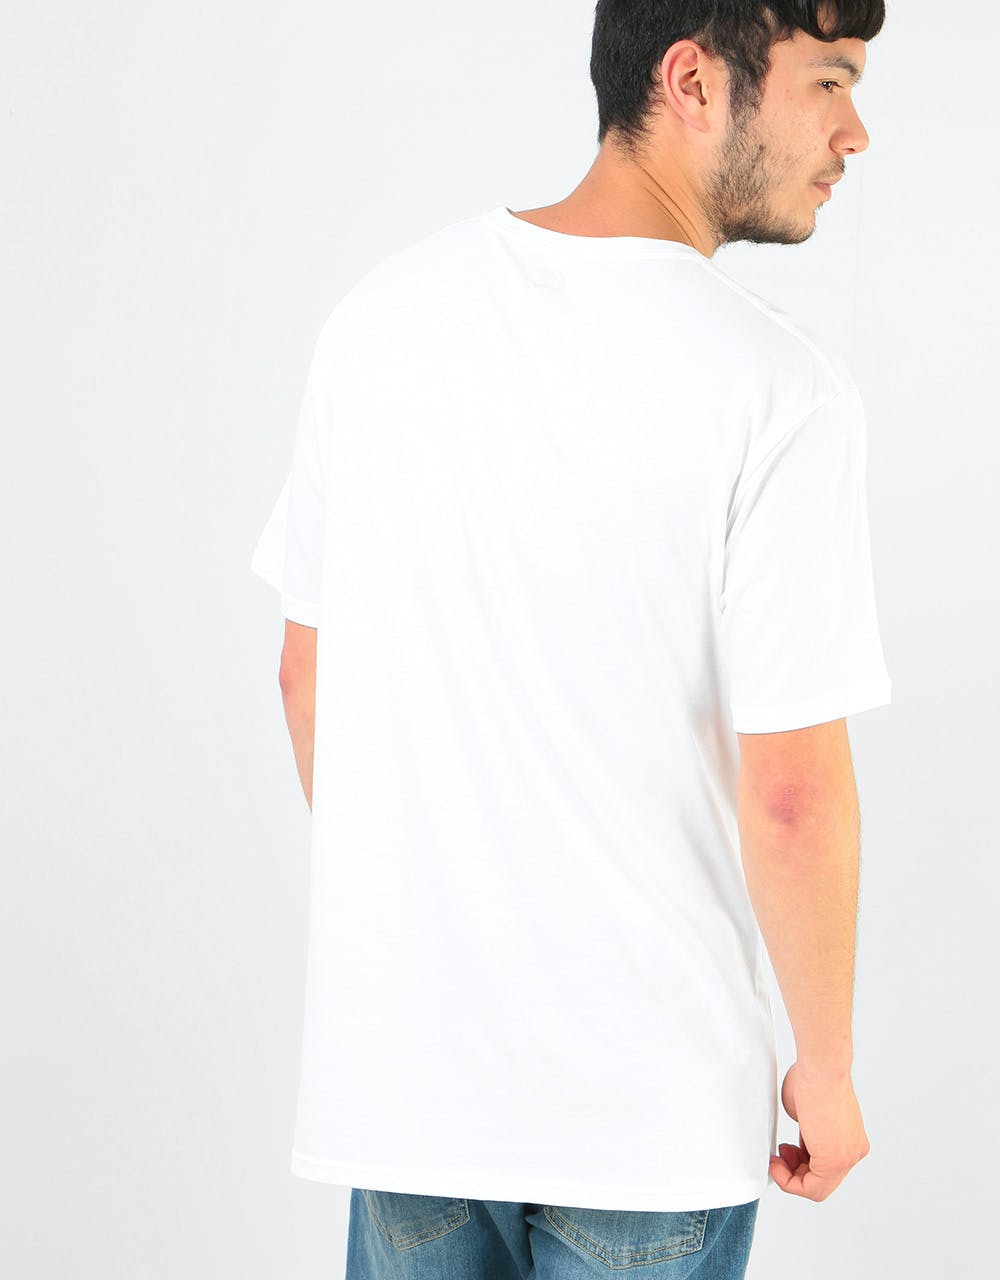 Volcom Crisp Stone Basic T-Shirt - White